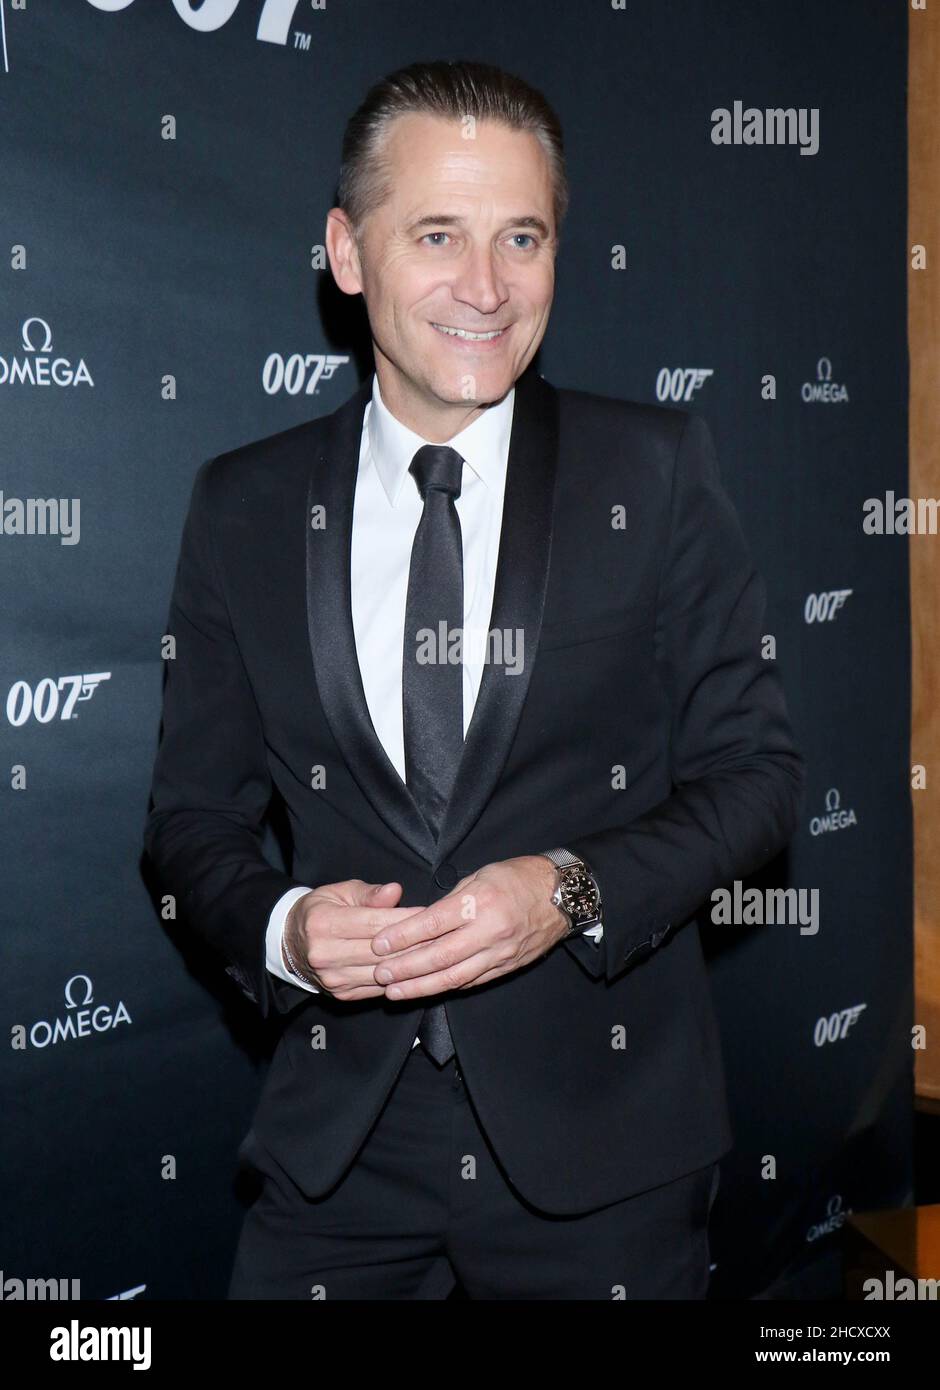 New York - NY - 20191204- OMEGA lance James Bond Watch avec Daniel Craig -  EN PHOTO : Raynald Aeschlimann ROGER WONG Photo Stock - Alamy